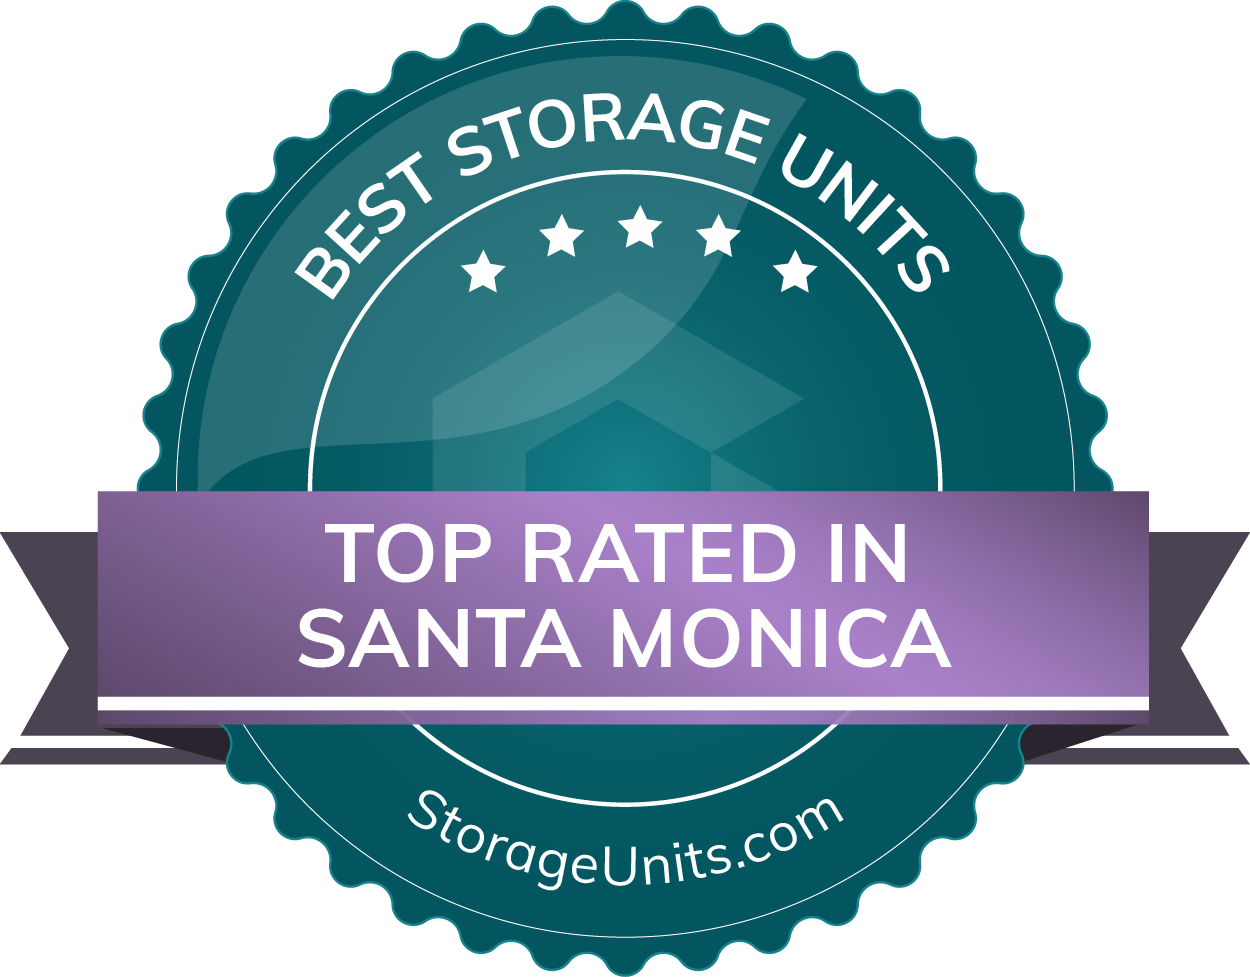 Best Self Storage Units in Santa Monica, California of 2022